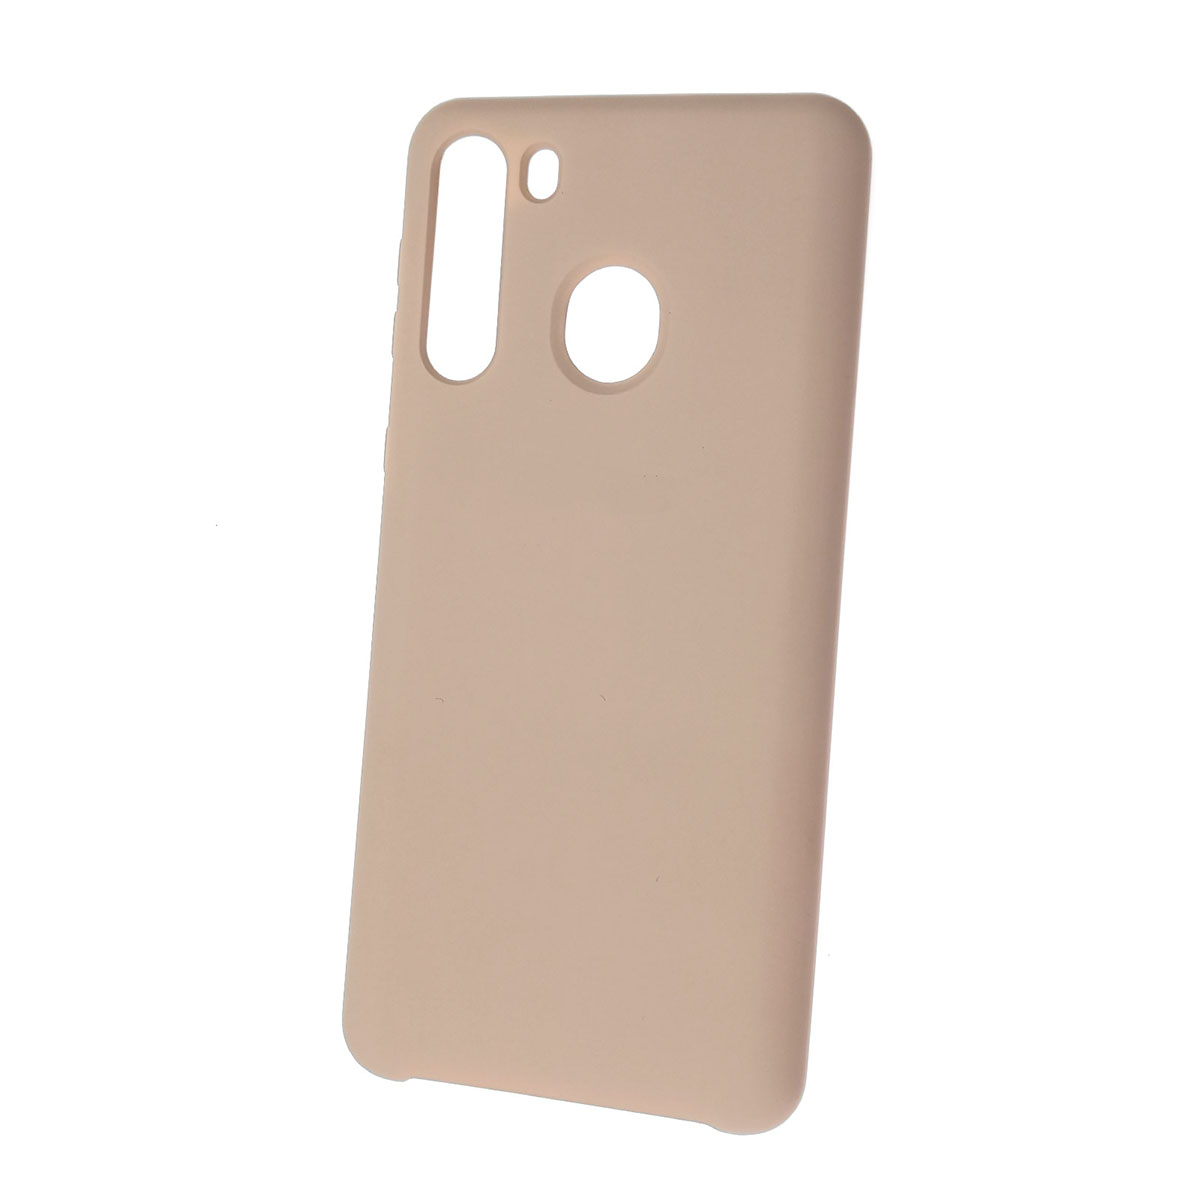 Чехол накладка Silicon Cover для SAMSUNG Galaxy A21 (SM-A215), силикон, бархат, цвет розовый песок.